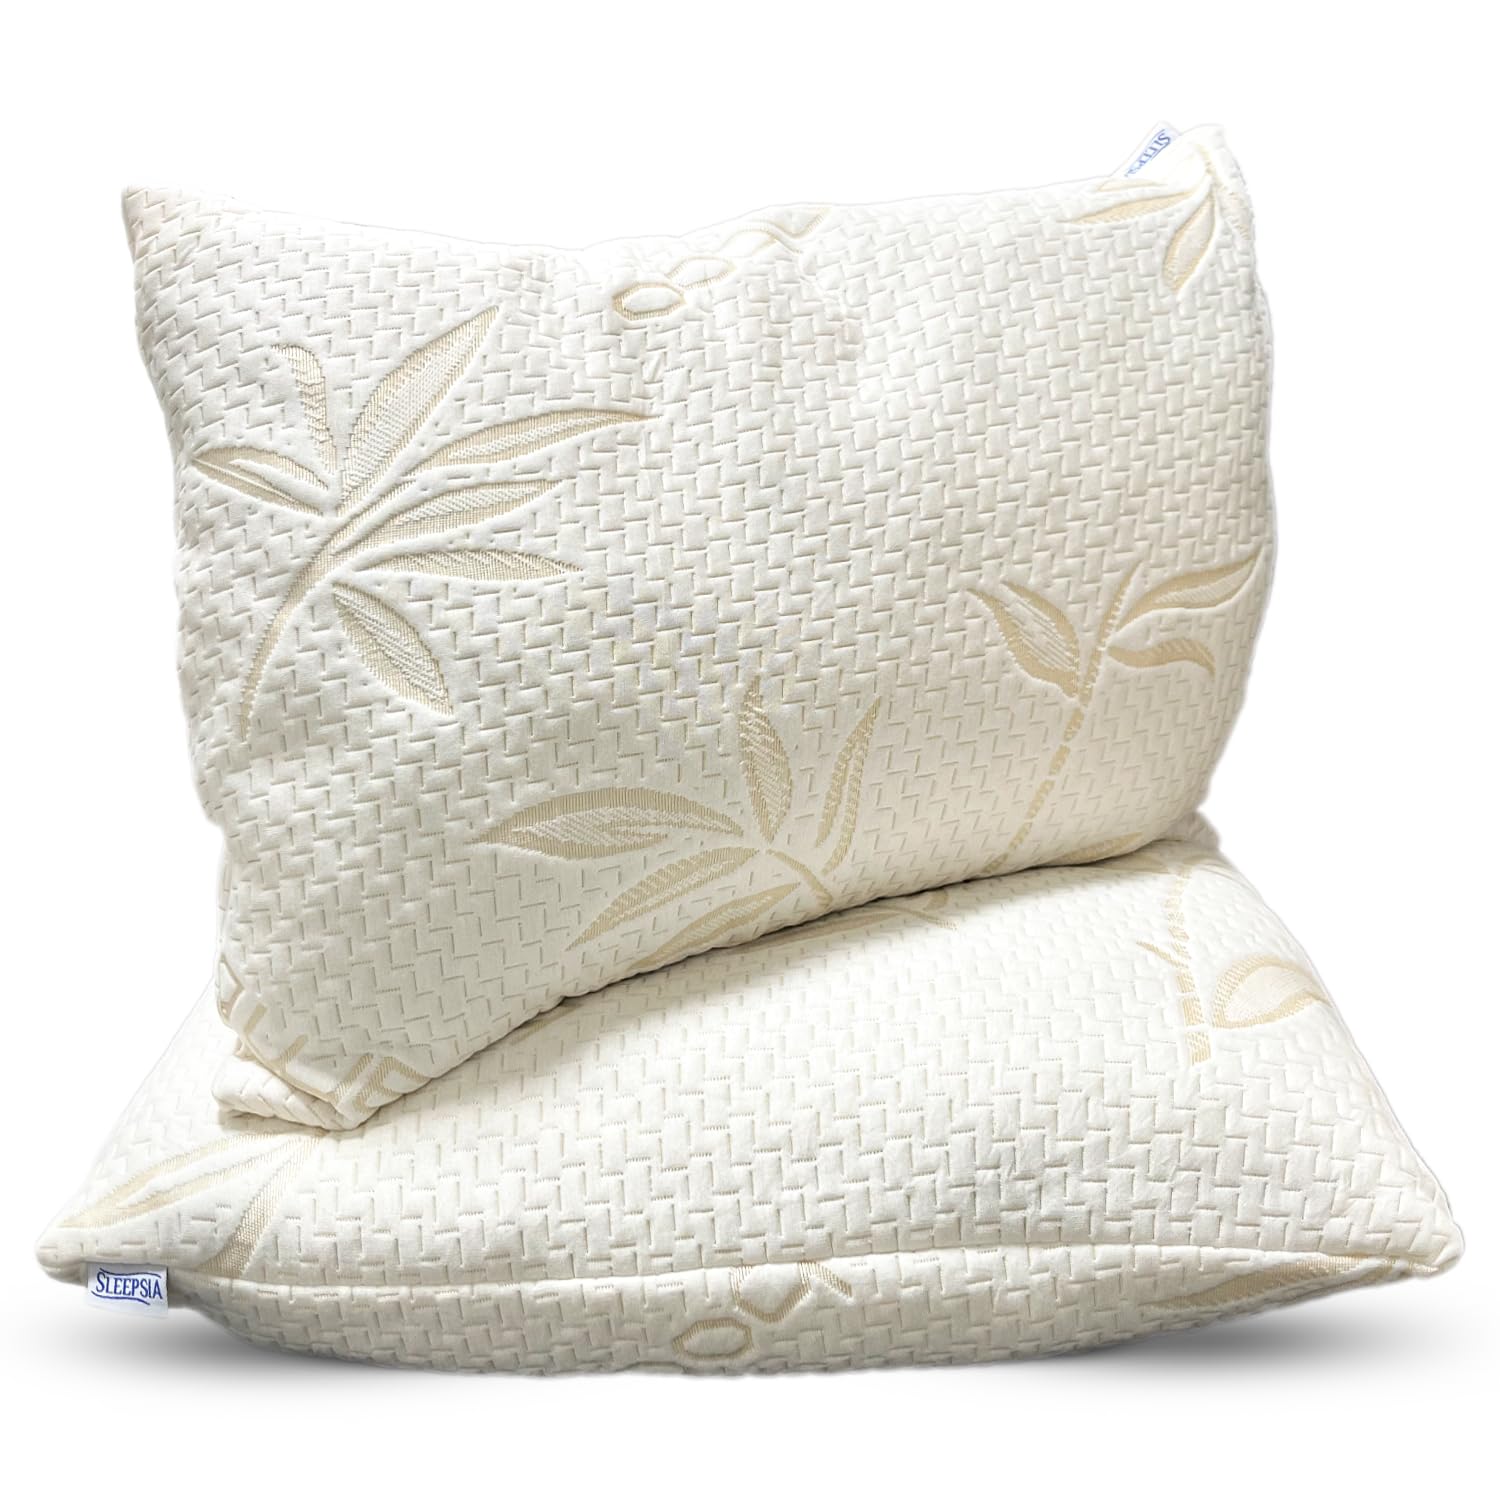 Sleepsia Bamboo Pillow